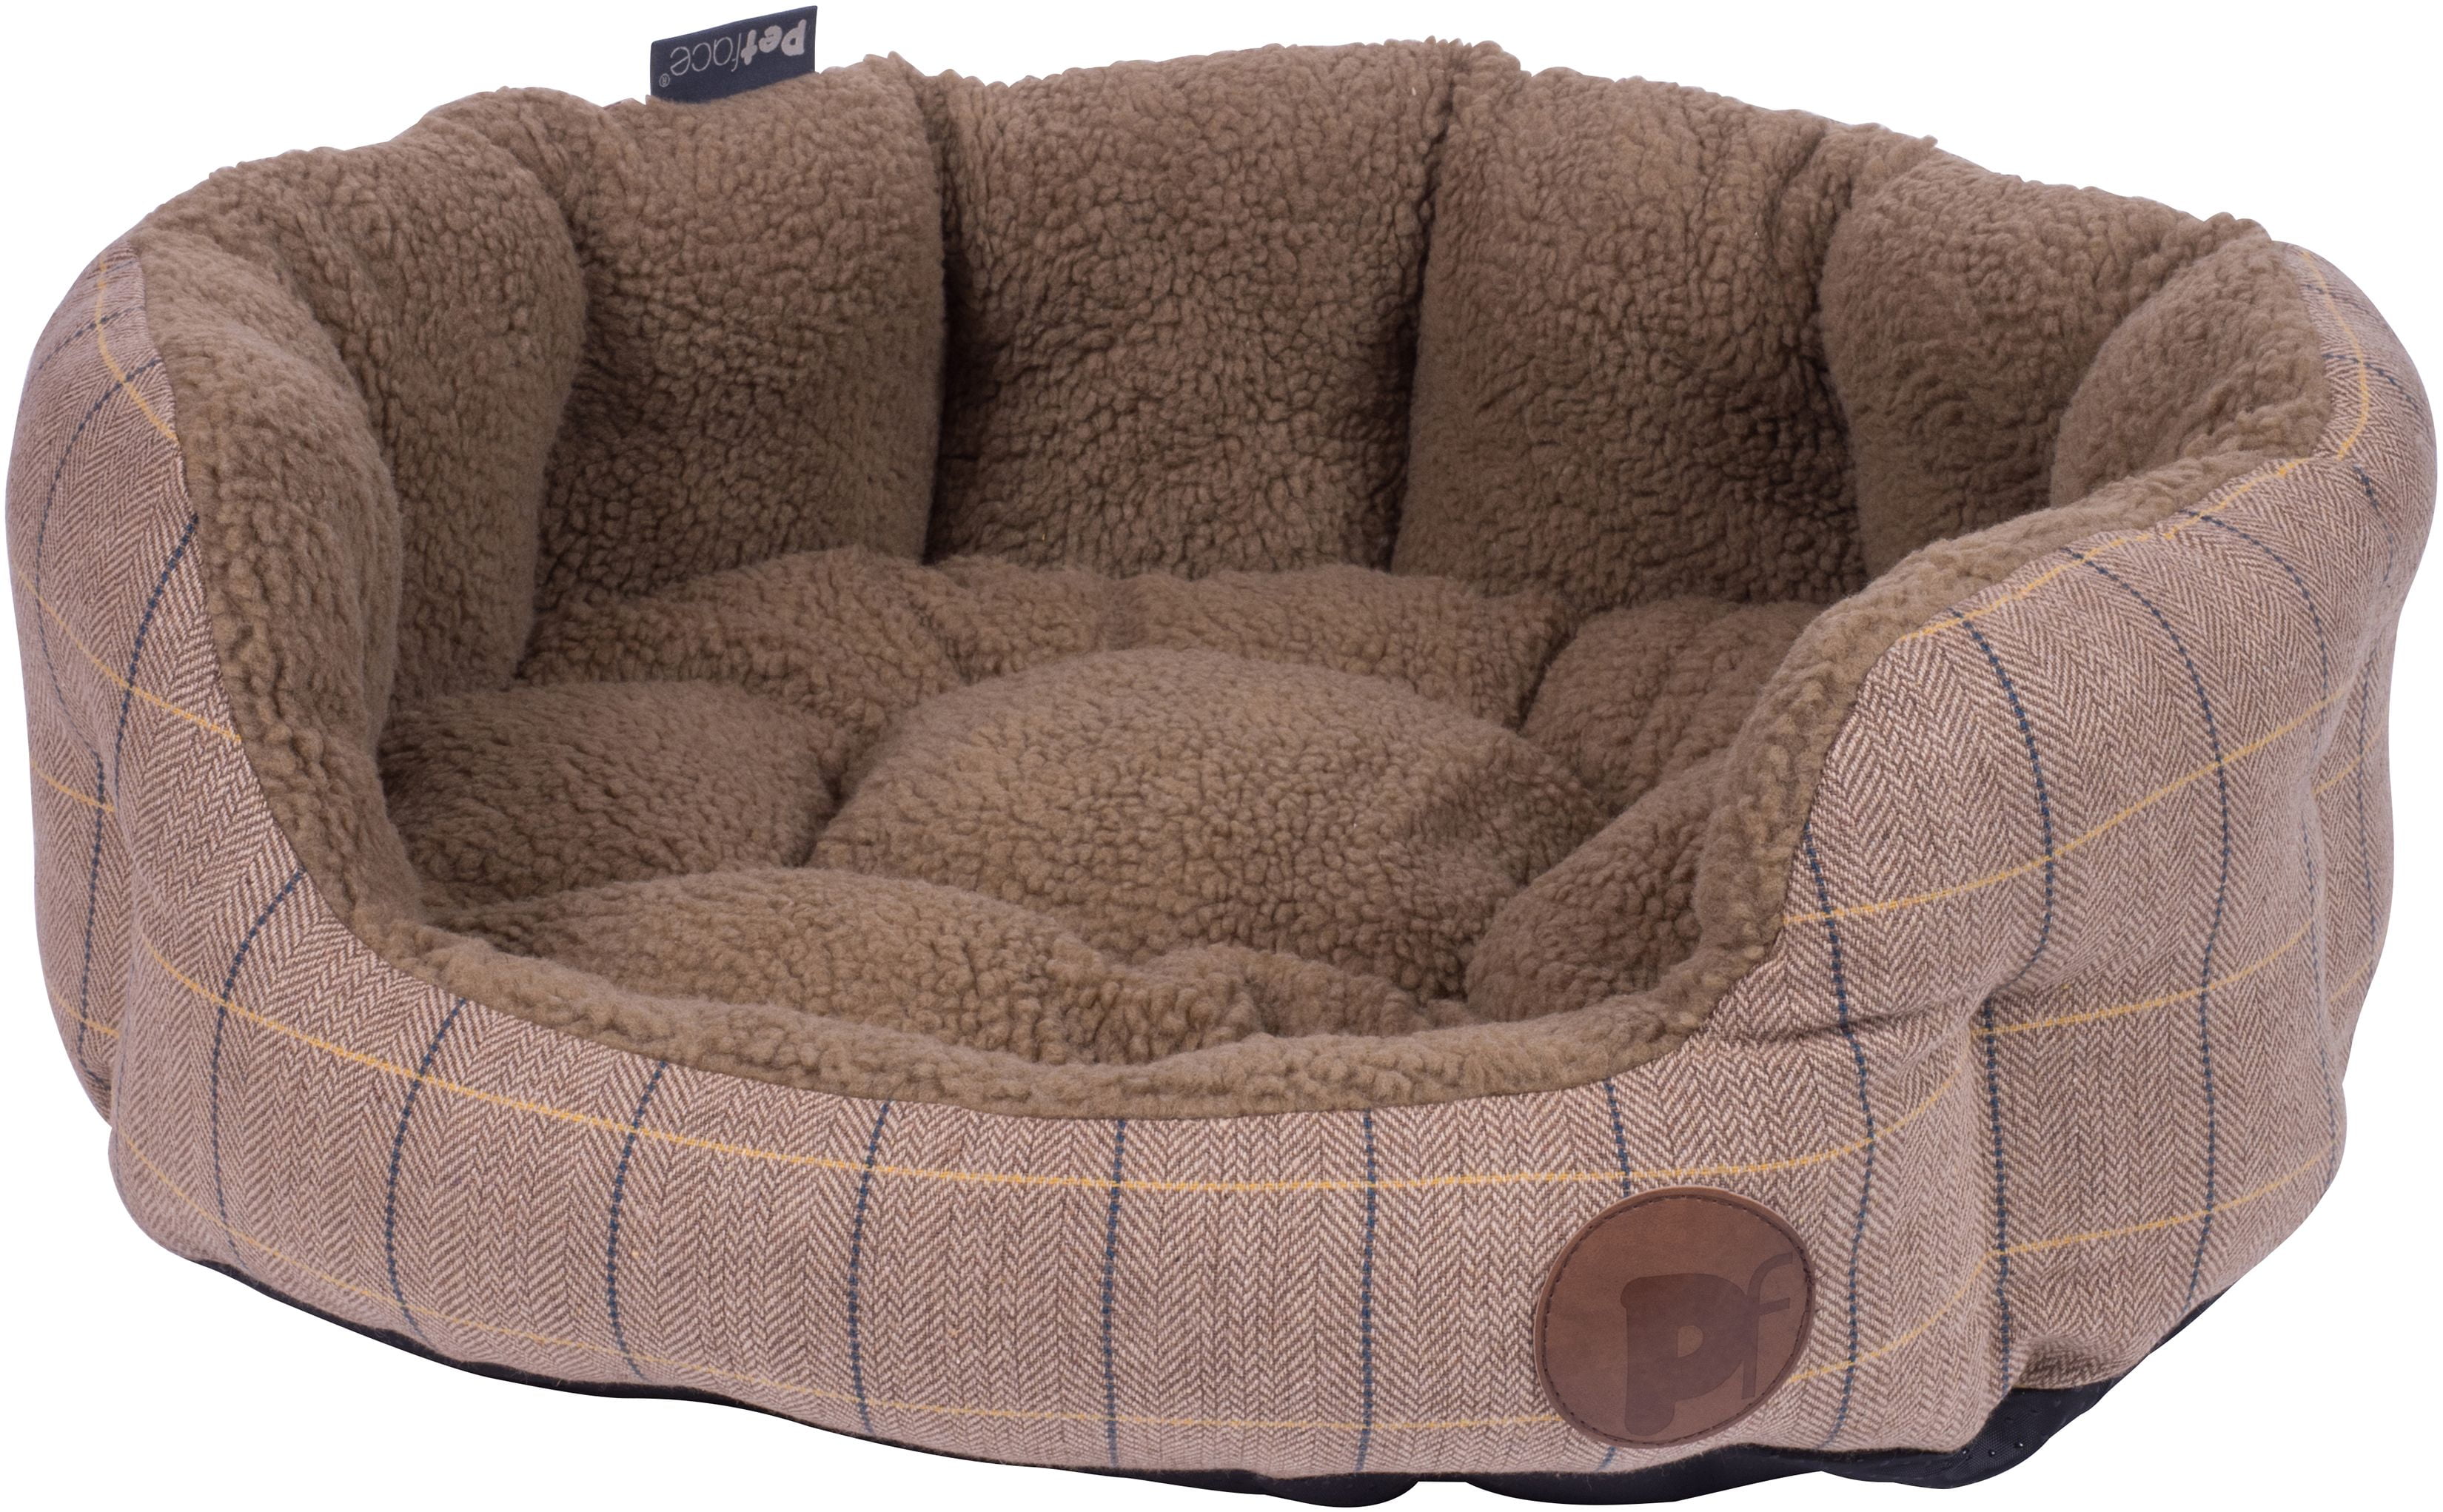 Extra large oval dog beds